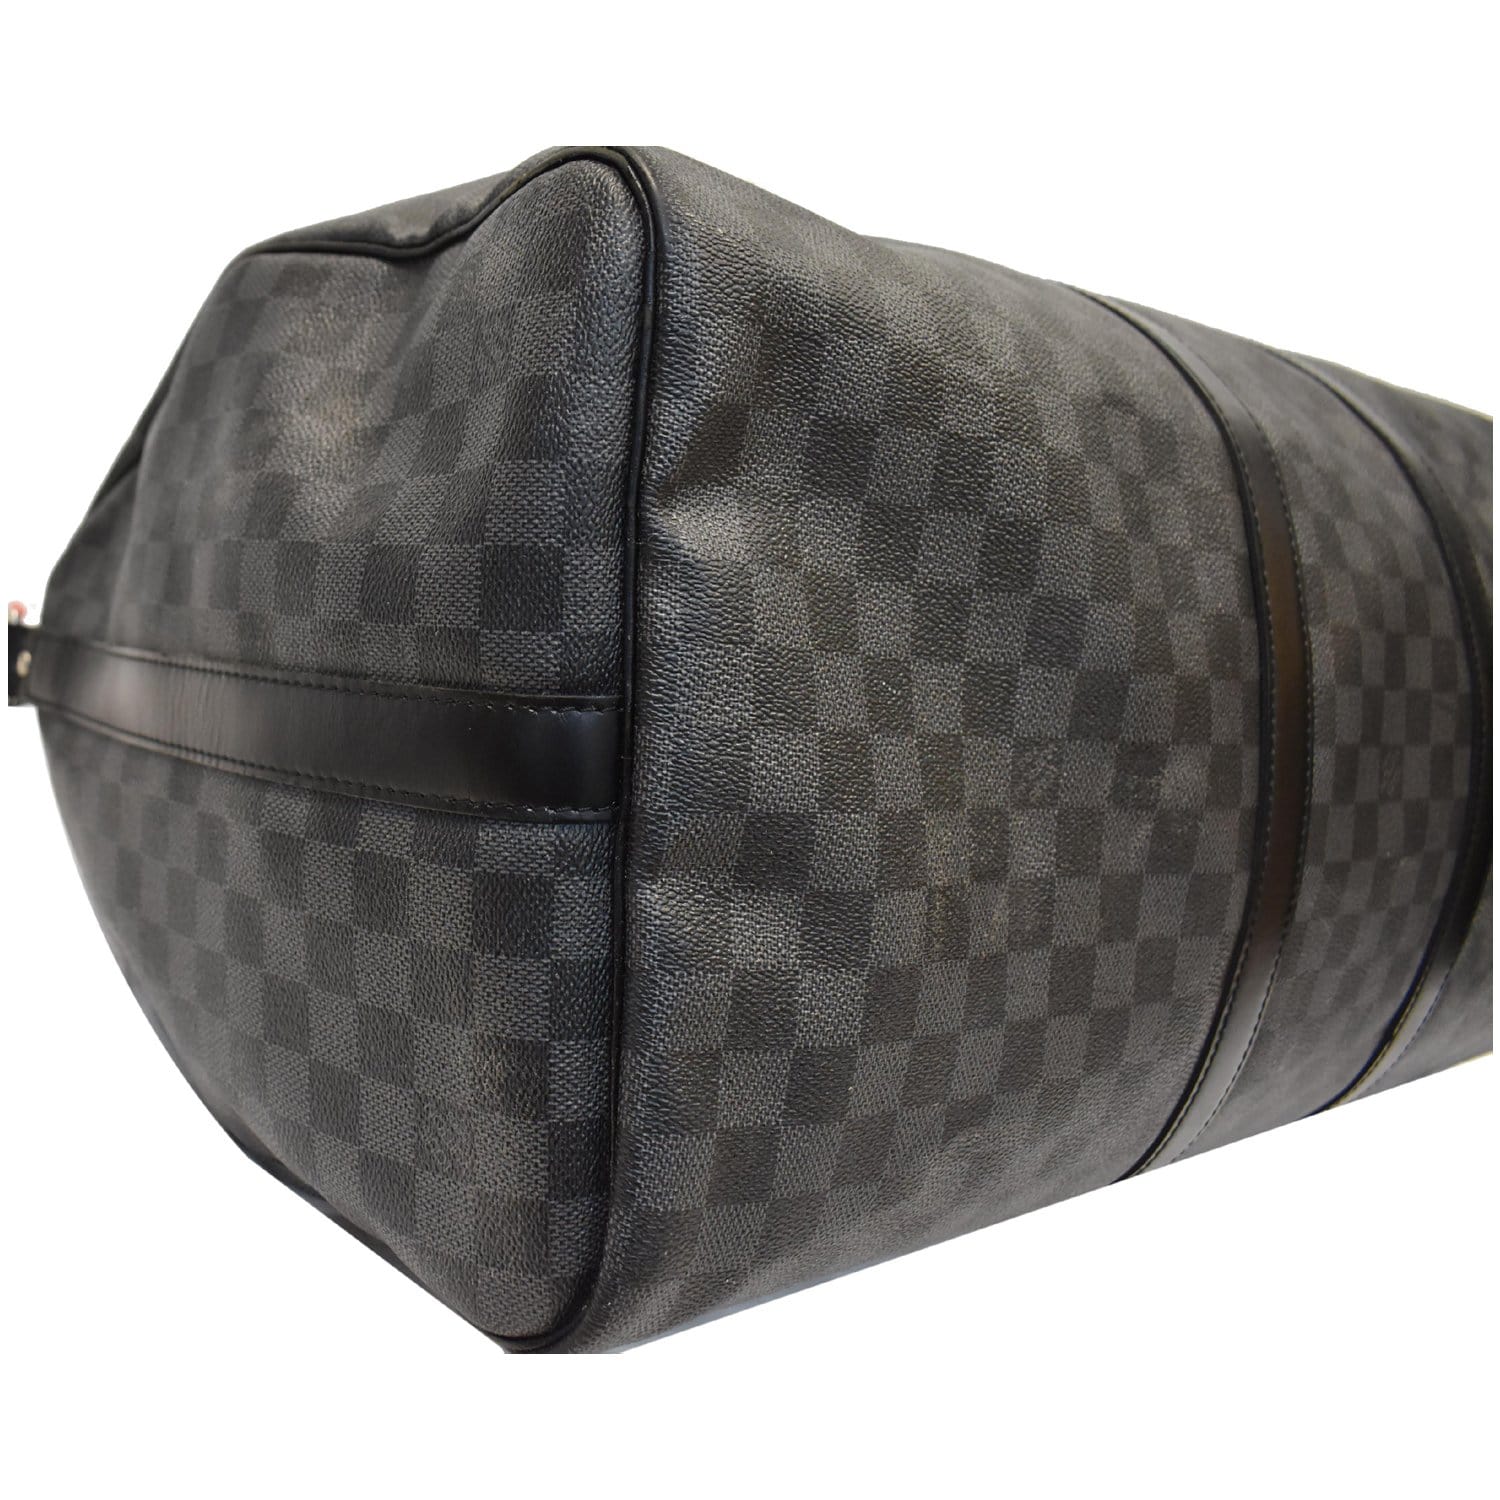 Keepall 55 Damier Graphite Bandouliere – Keeks Designer Handbags